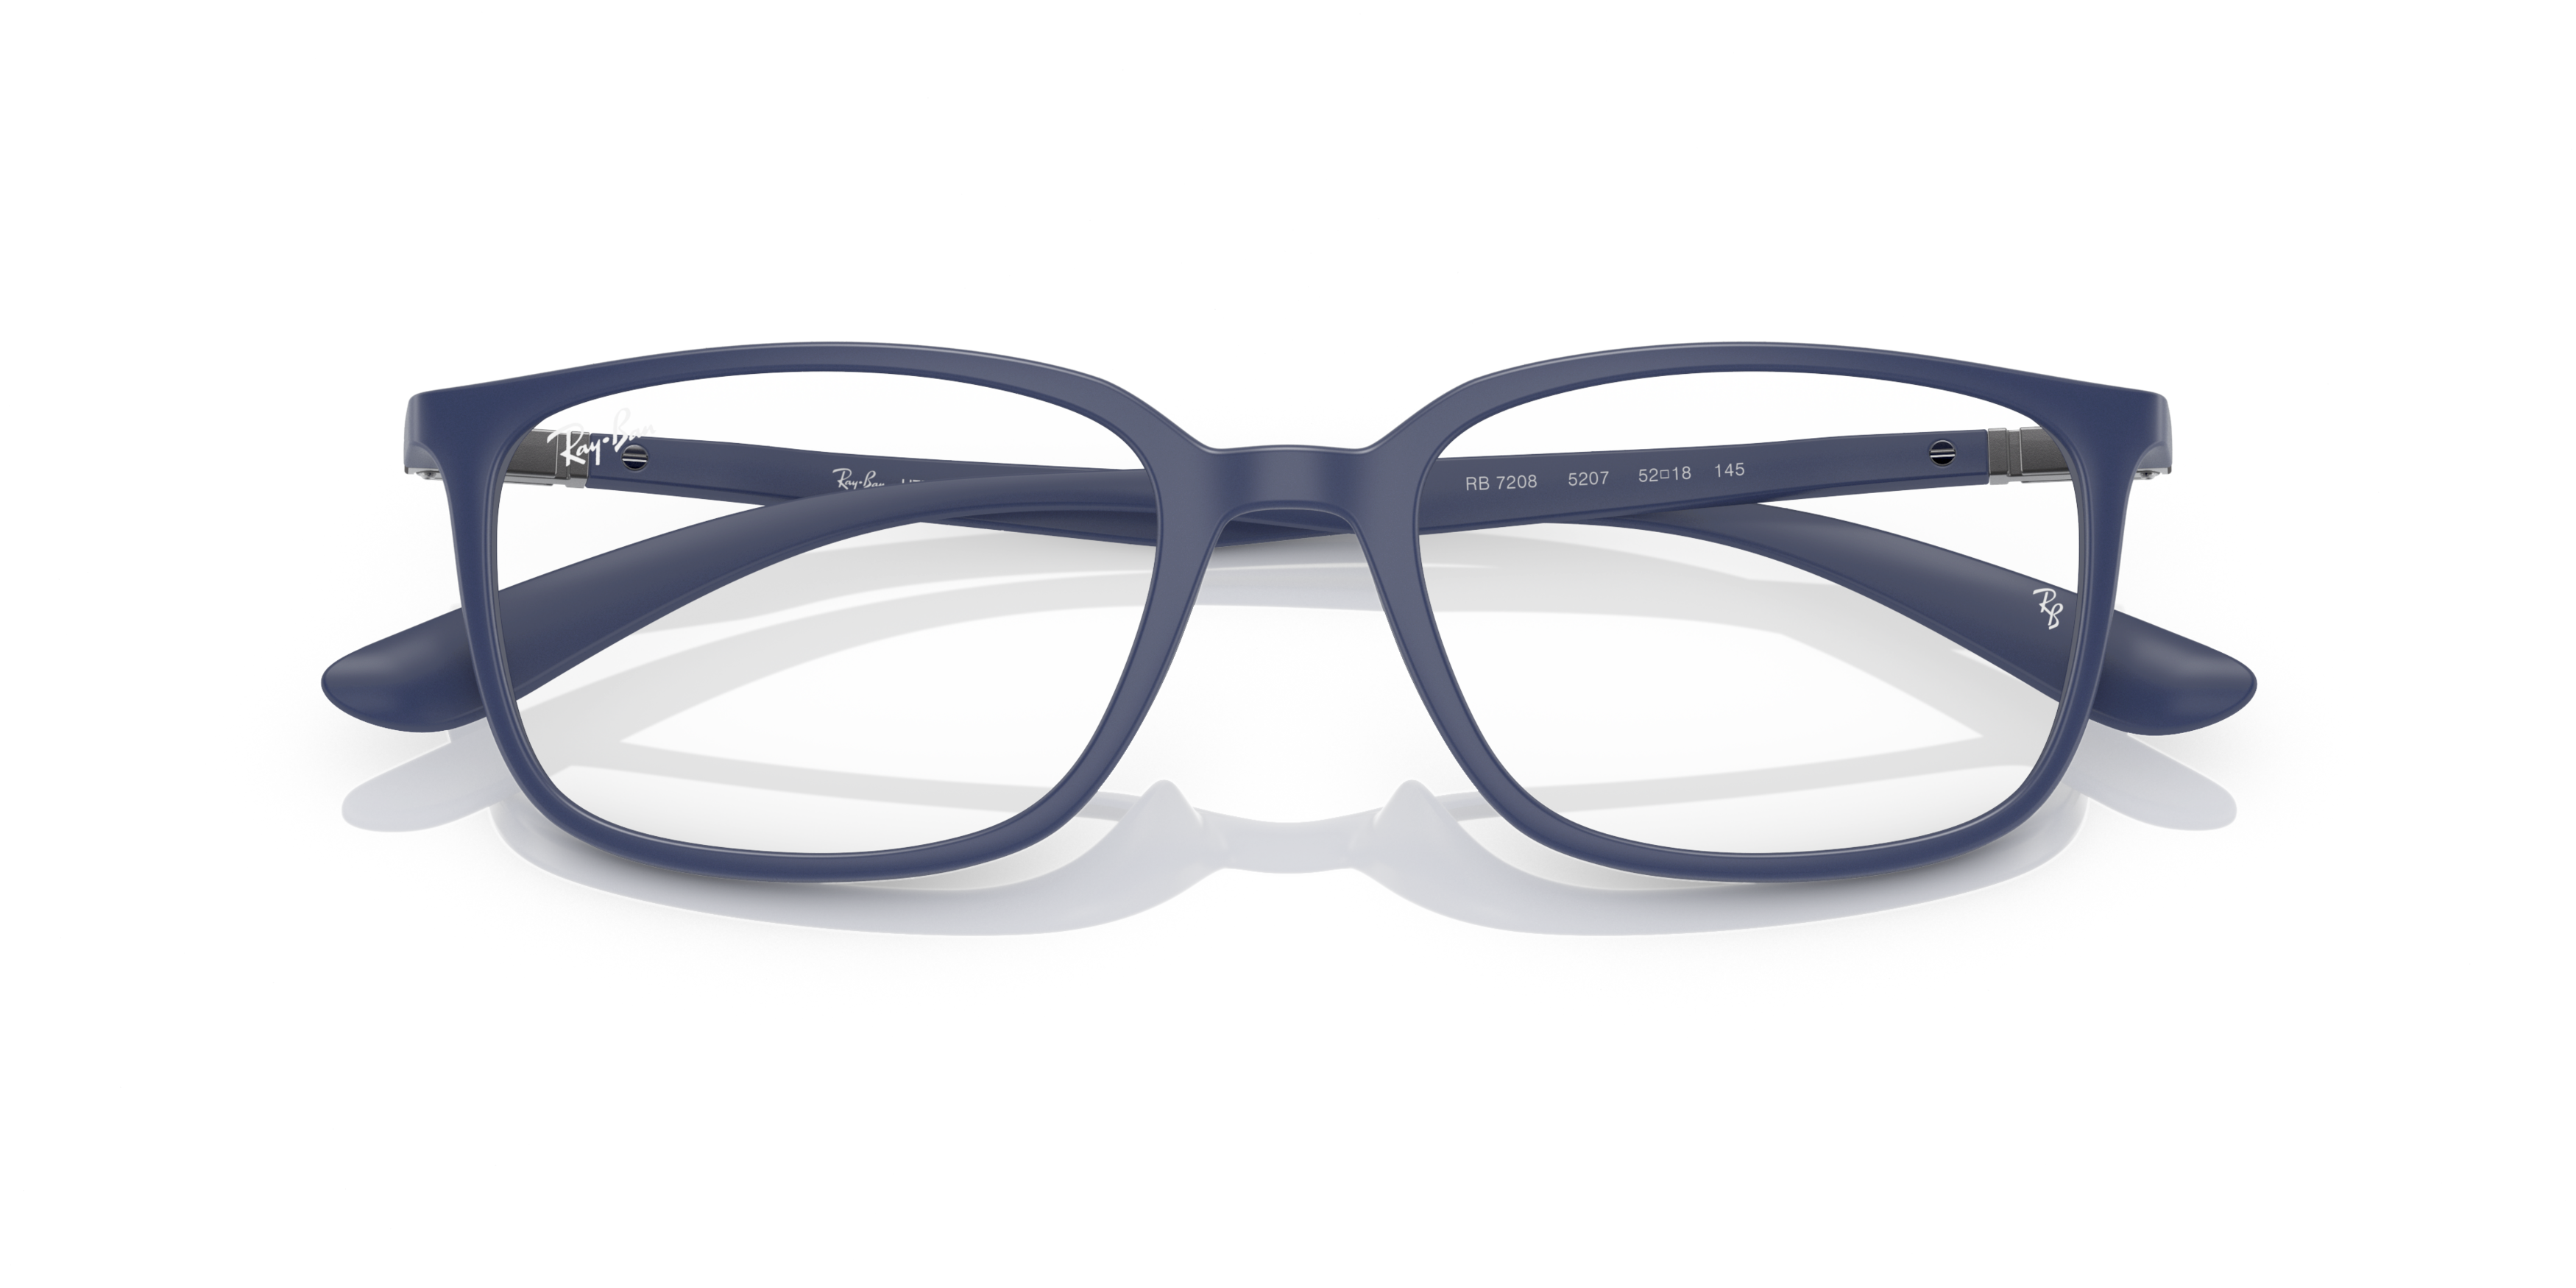 Folded Ray-Ban RX 7208 Glasses Transparent / Black